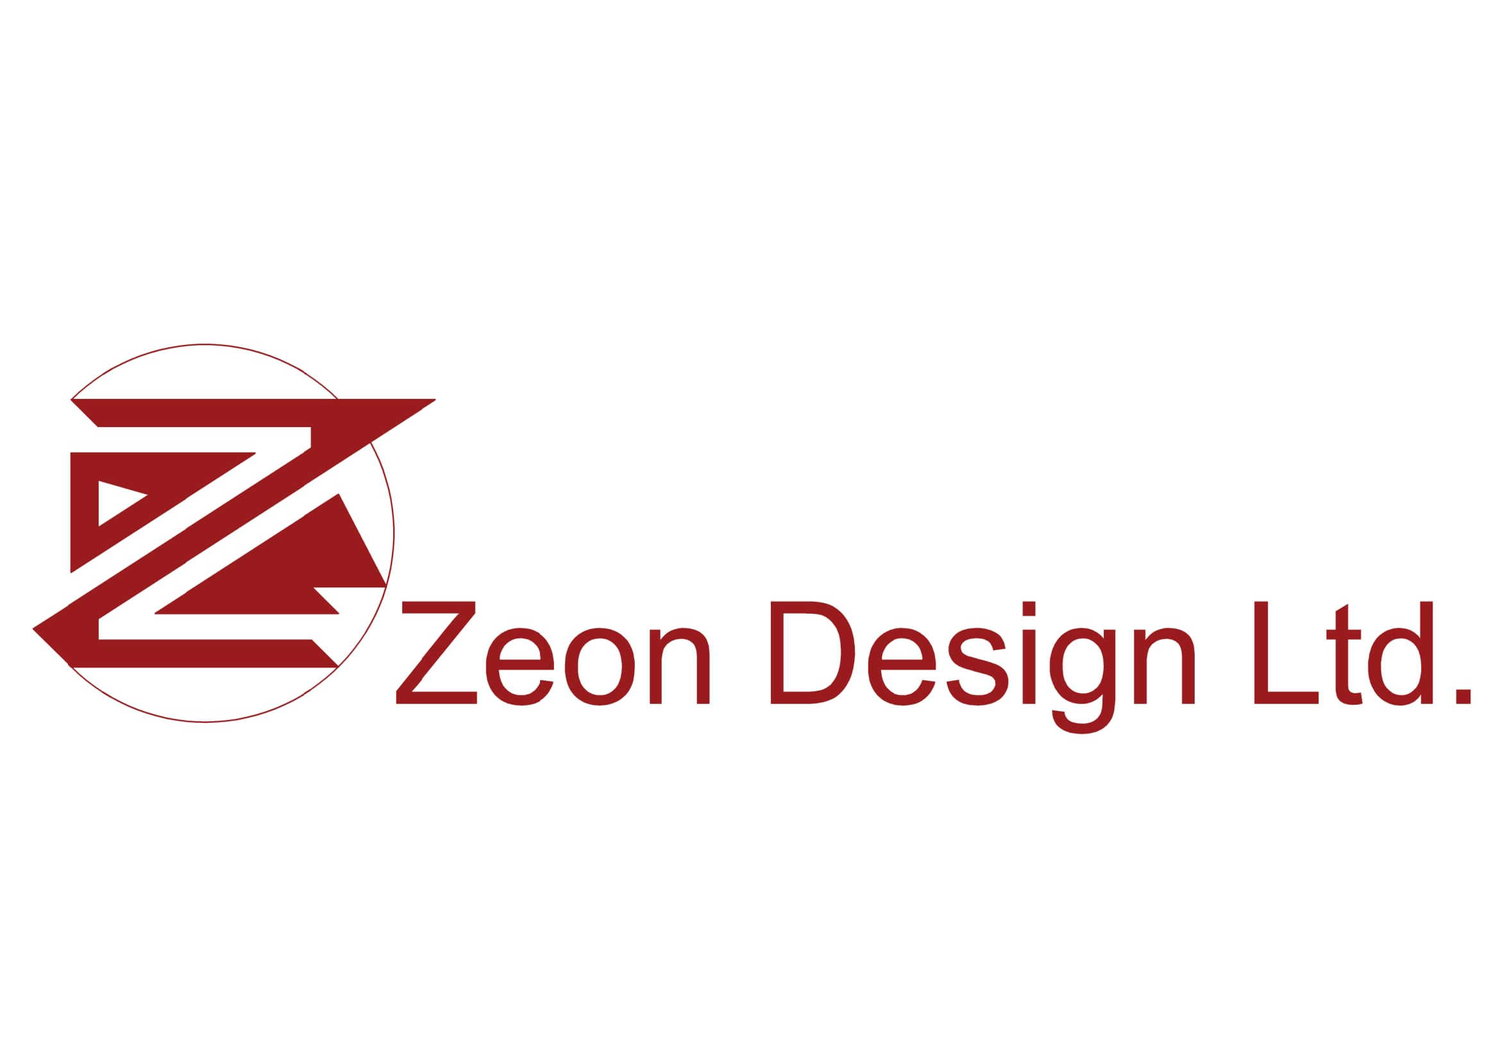 Zeon Design Ltd.